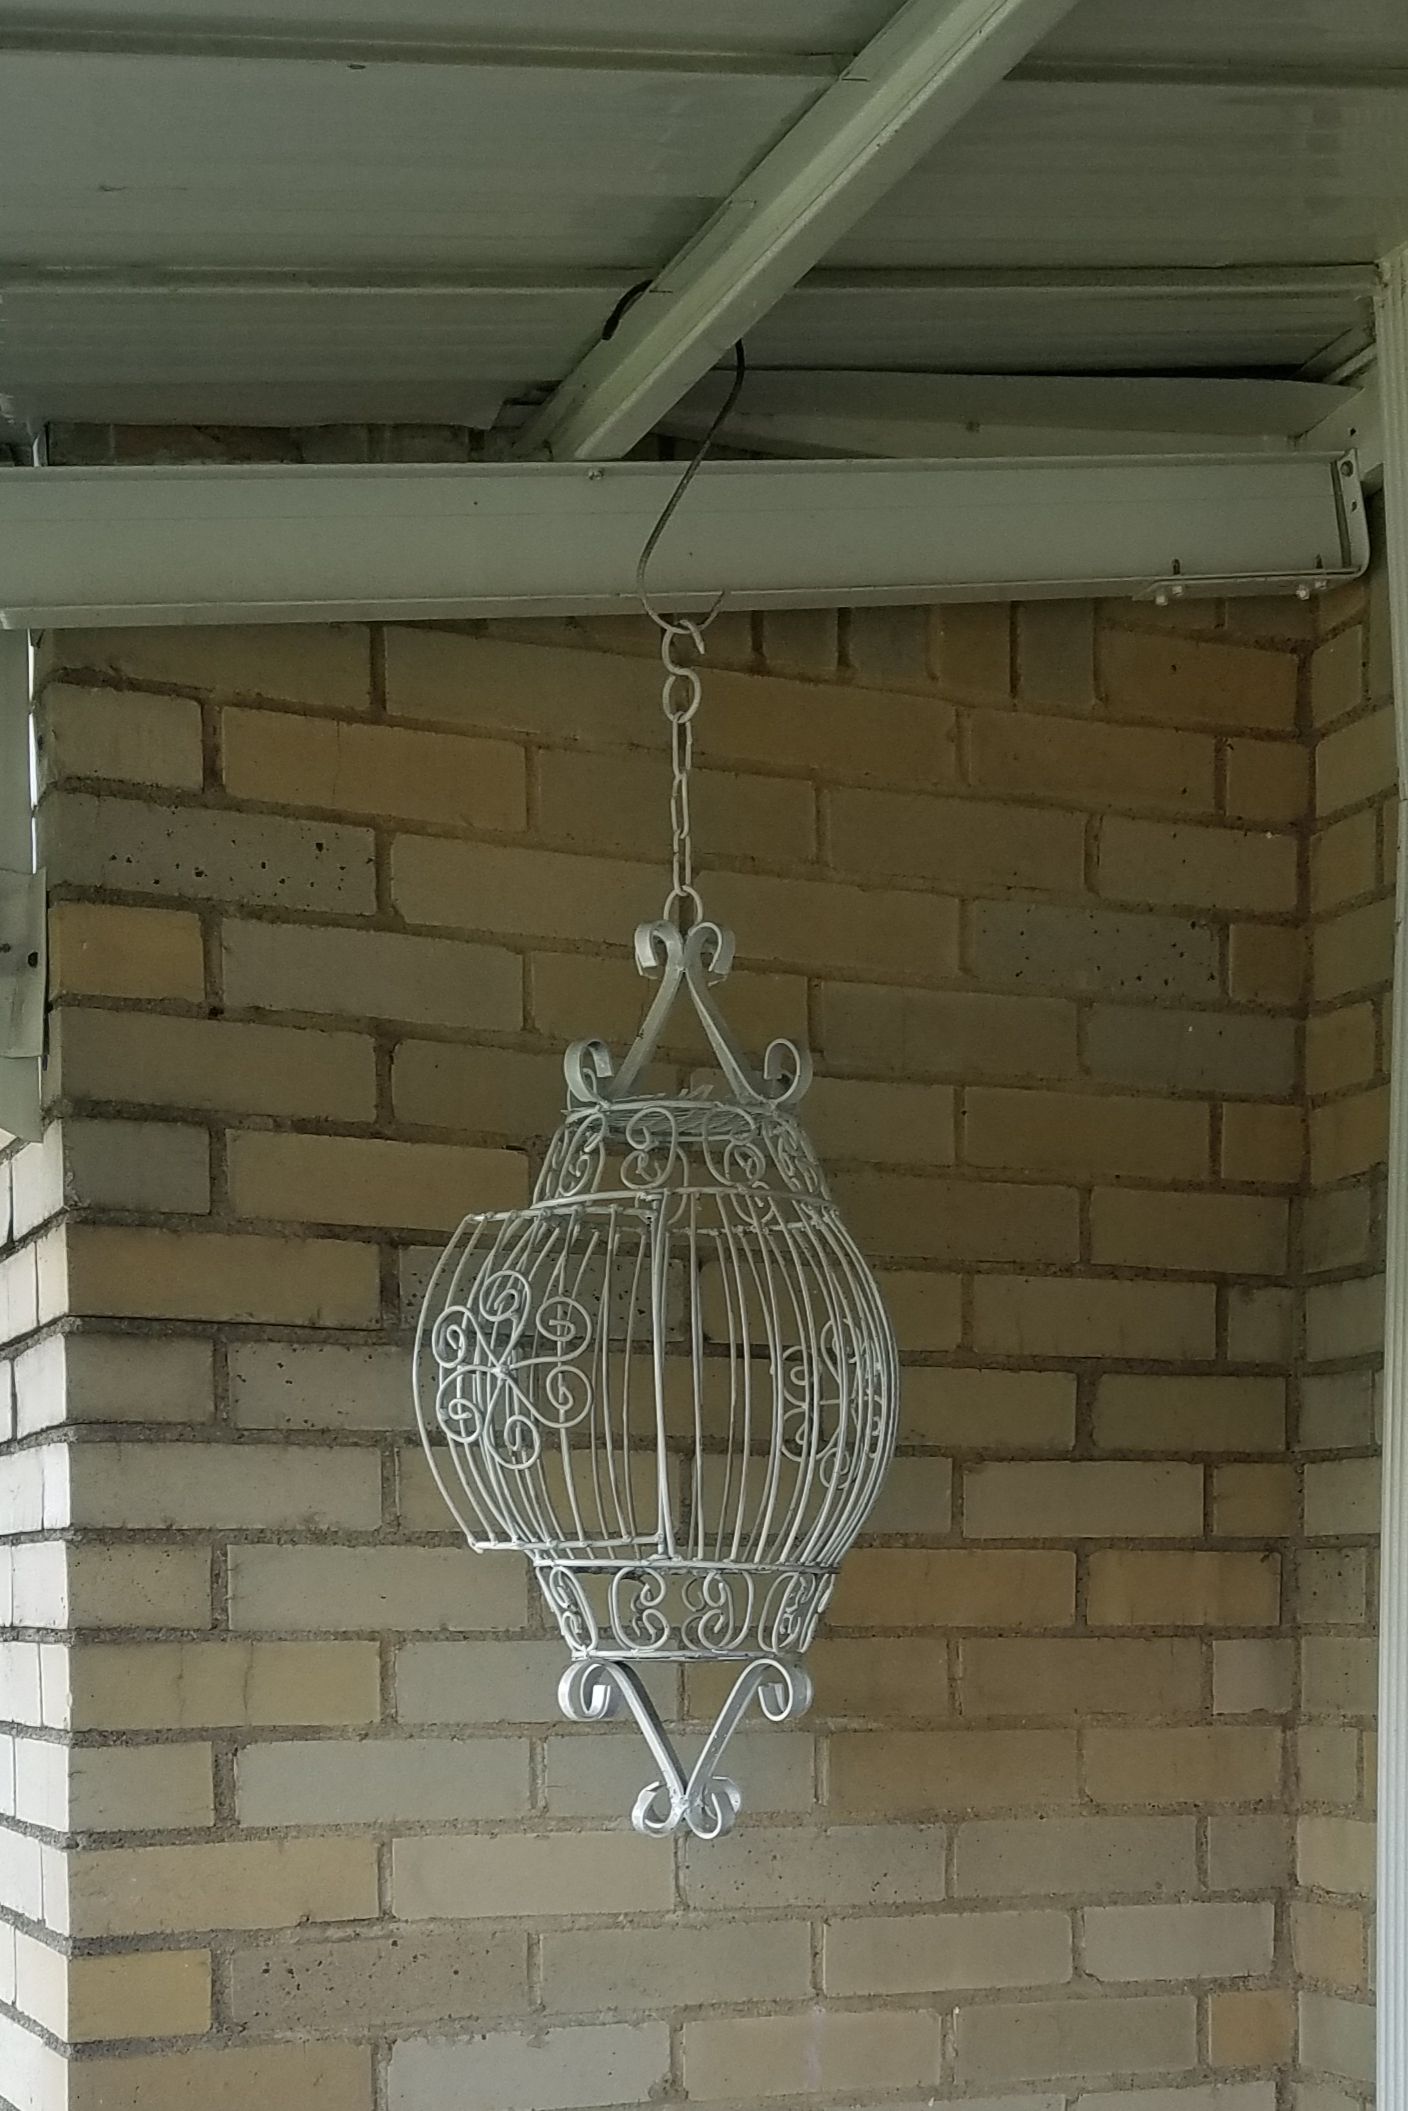 Decorative hanging bird cage